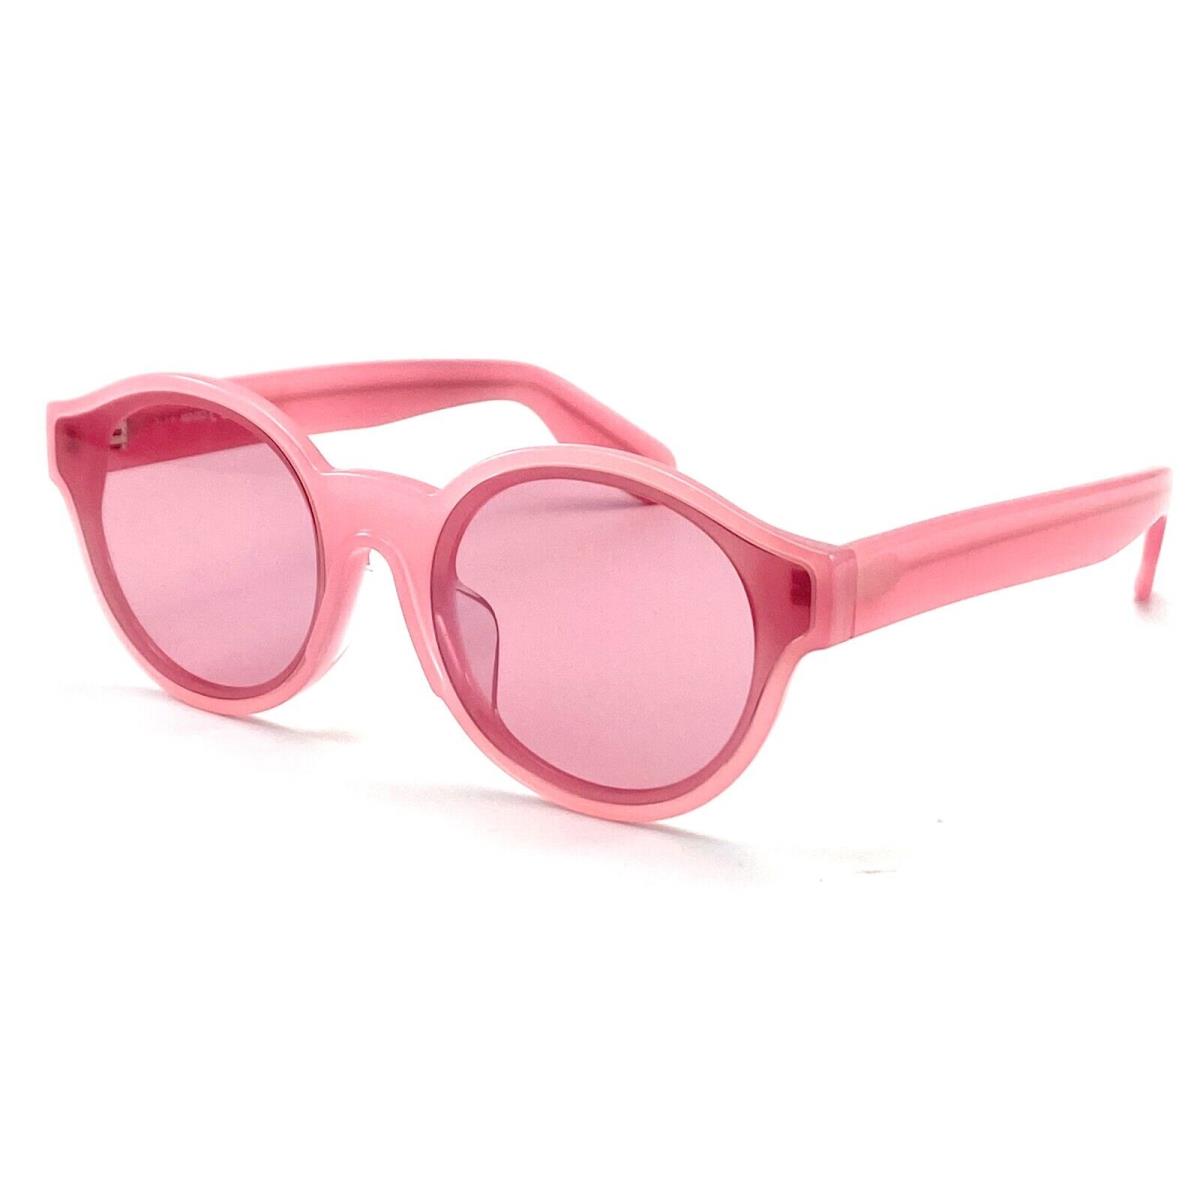 Kenzo Paris KZ40008F 72Y Pink Sunglasses 60-19 150 W/case